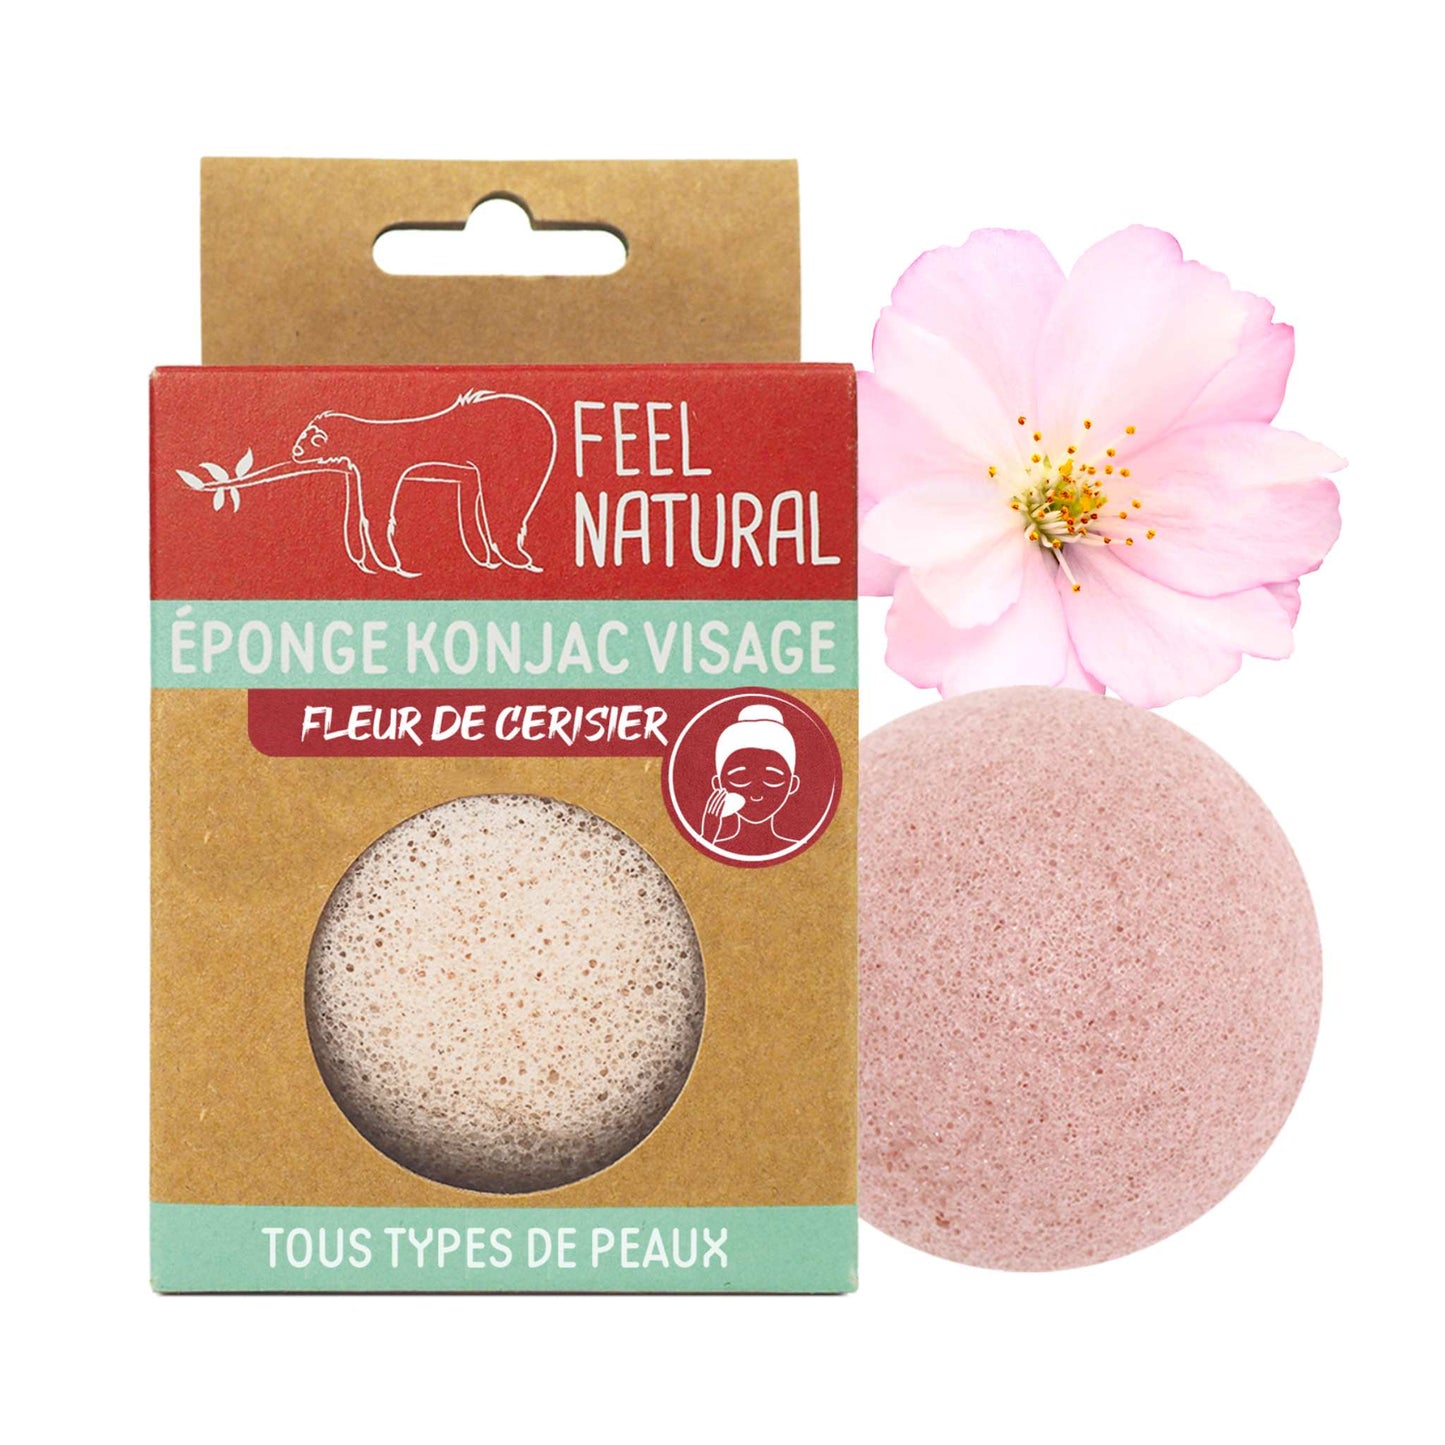 Feel Natural Bath Sponges & Loofahs Konjac Sponge - Facial Sponge - Cherry Blossom - Feel Natural